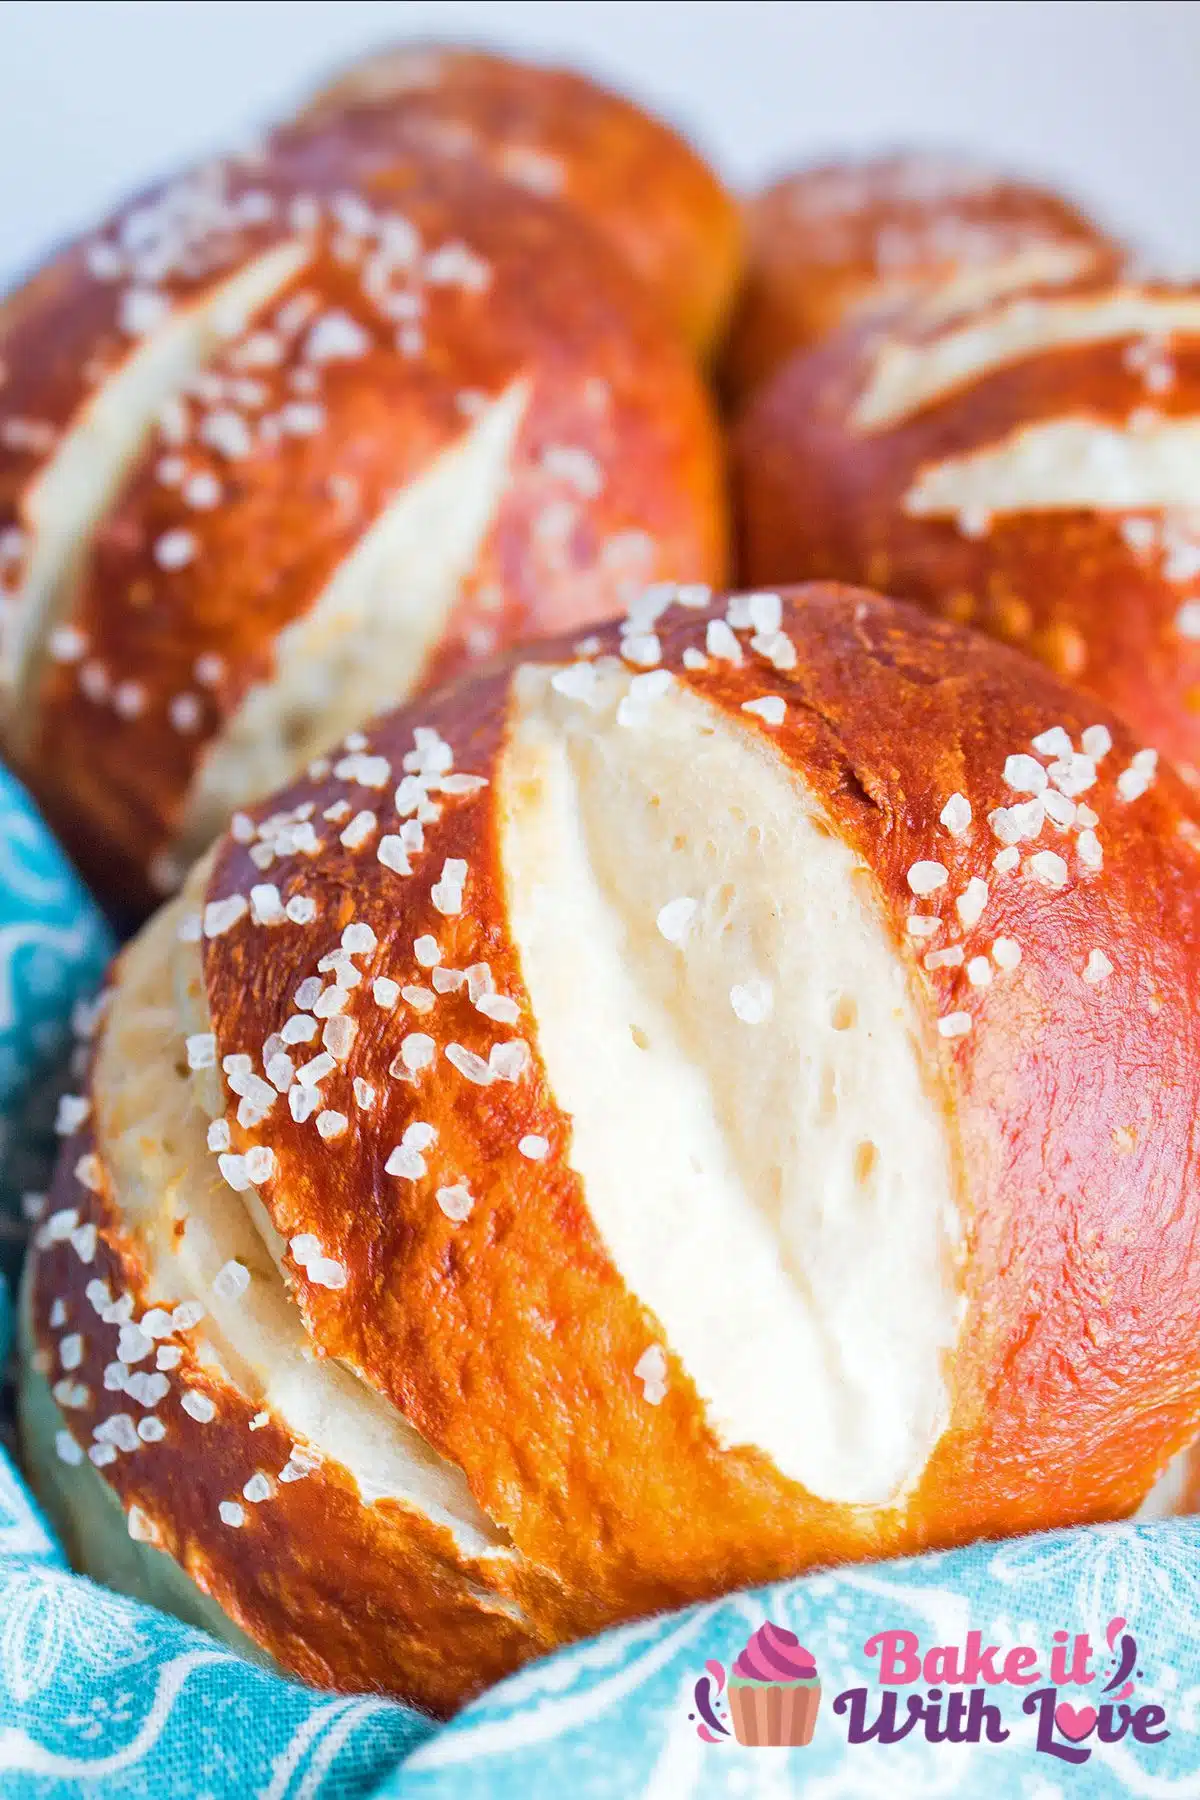 Best delicious pretzel buns or pretzel rolls recipe to make for fantastic burgers & sandwiches, shown served in a bandana-lined basket.